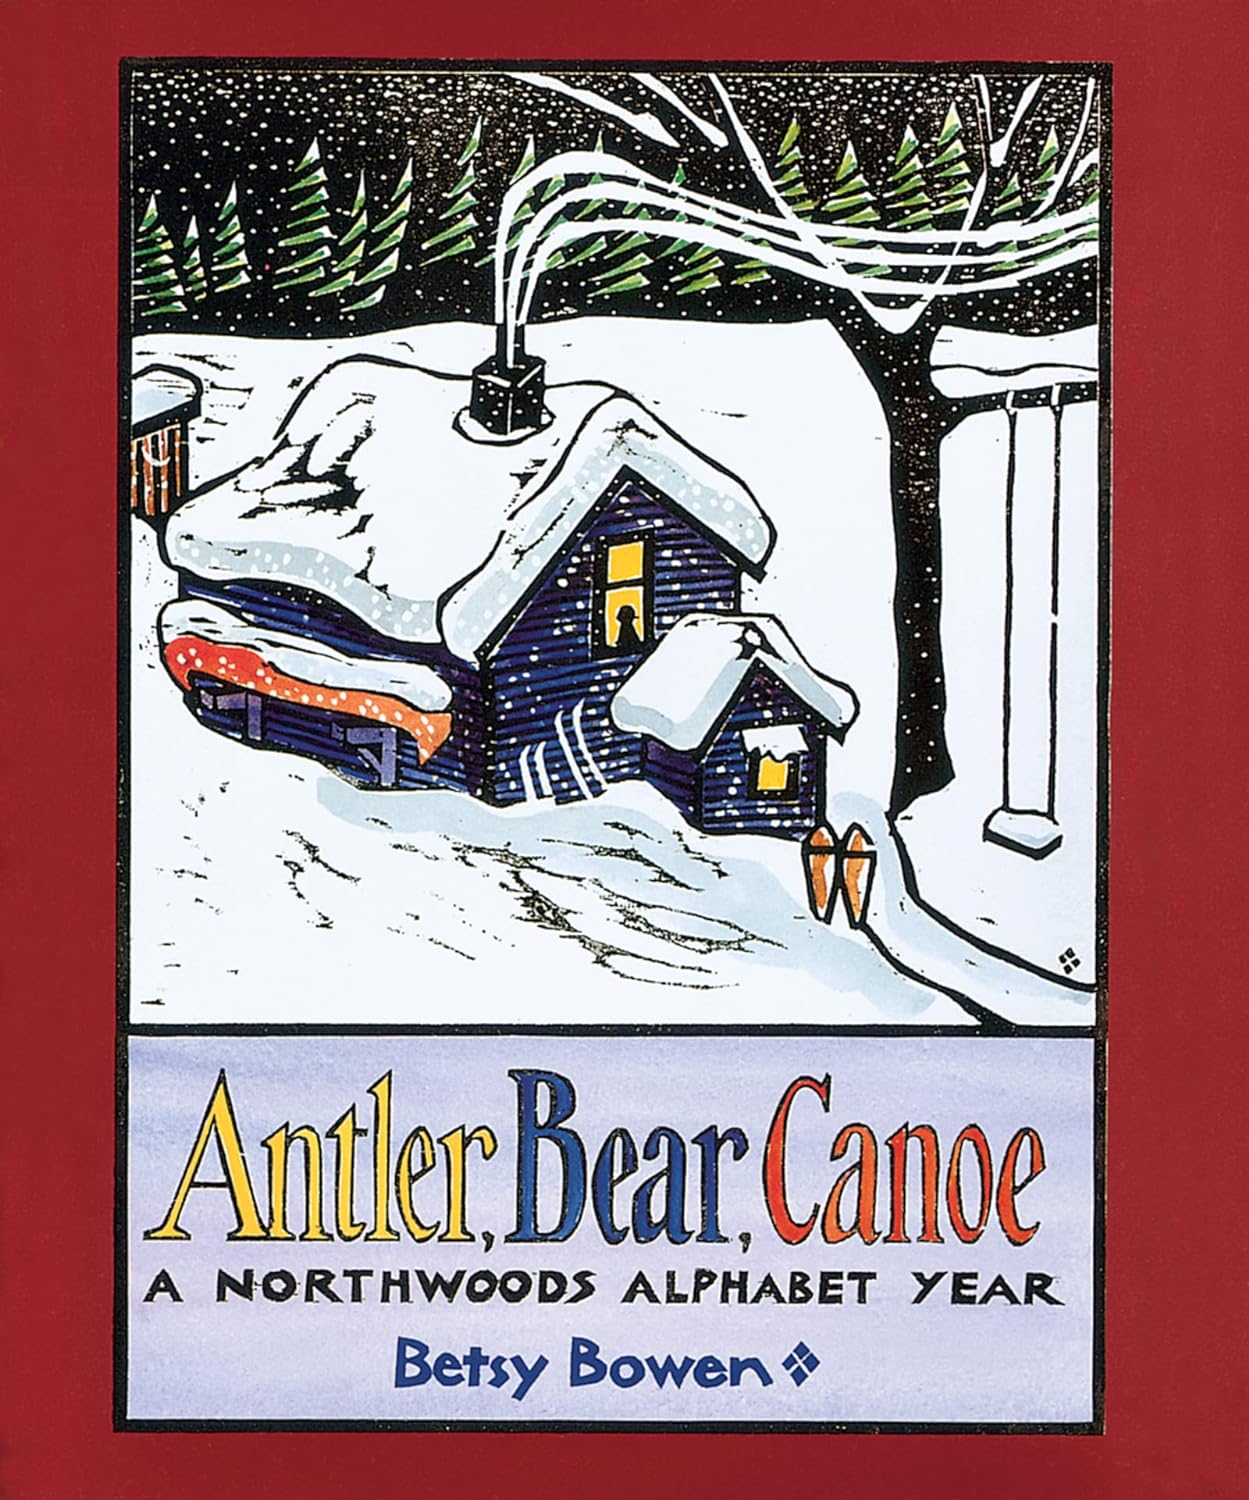 Antler, Bear, Canoe: A Northwoods Alphabet Year By Betsy Bowen